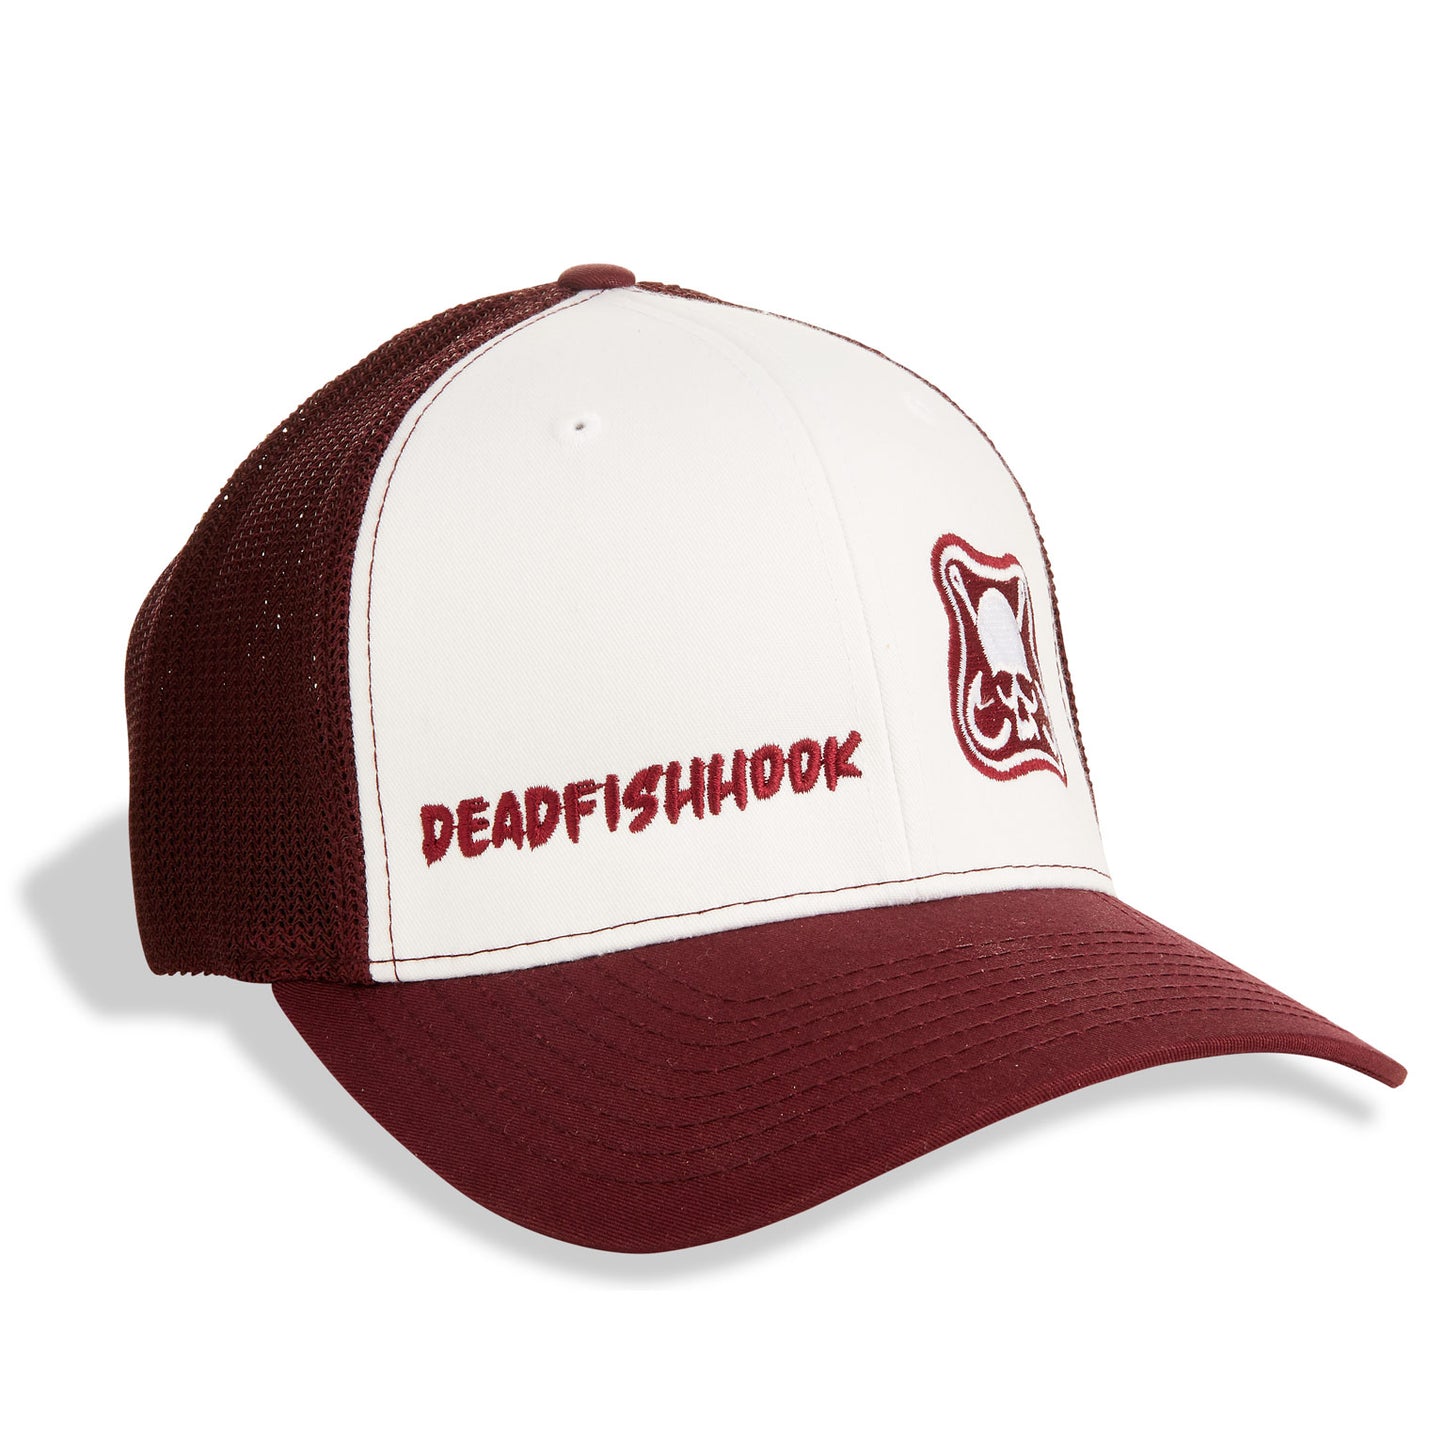 Dead Fish Hook maroon white brand patch trucker hat front